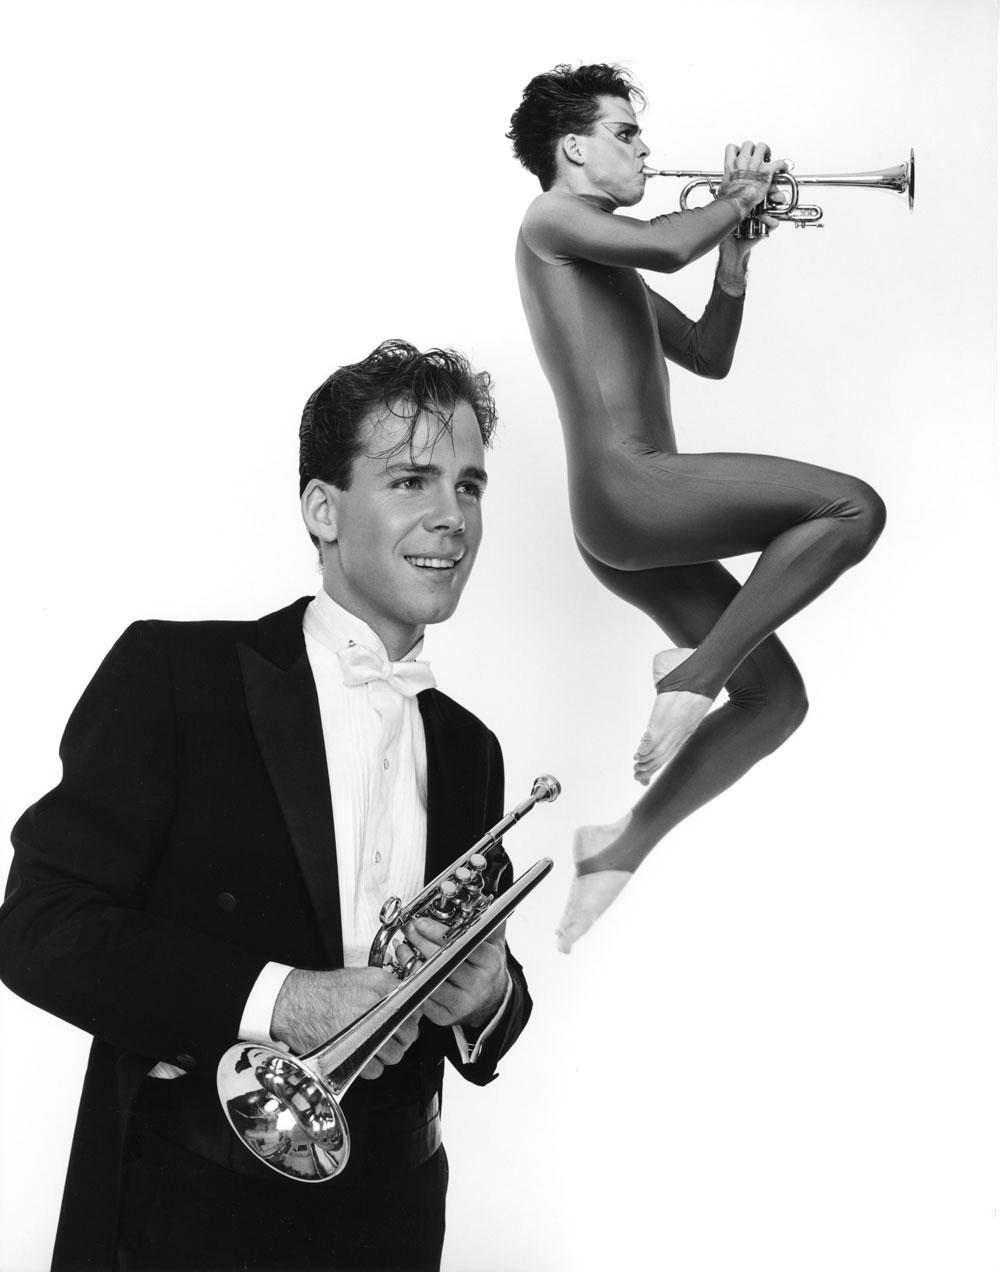 Jack Mitchell Portrait Photograph - American trumpet virtuoso, composer, & conductor Stephen Burns, double exposure